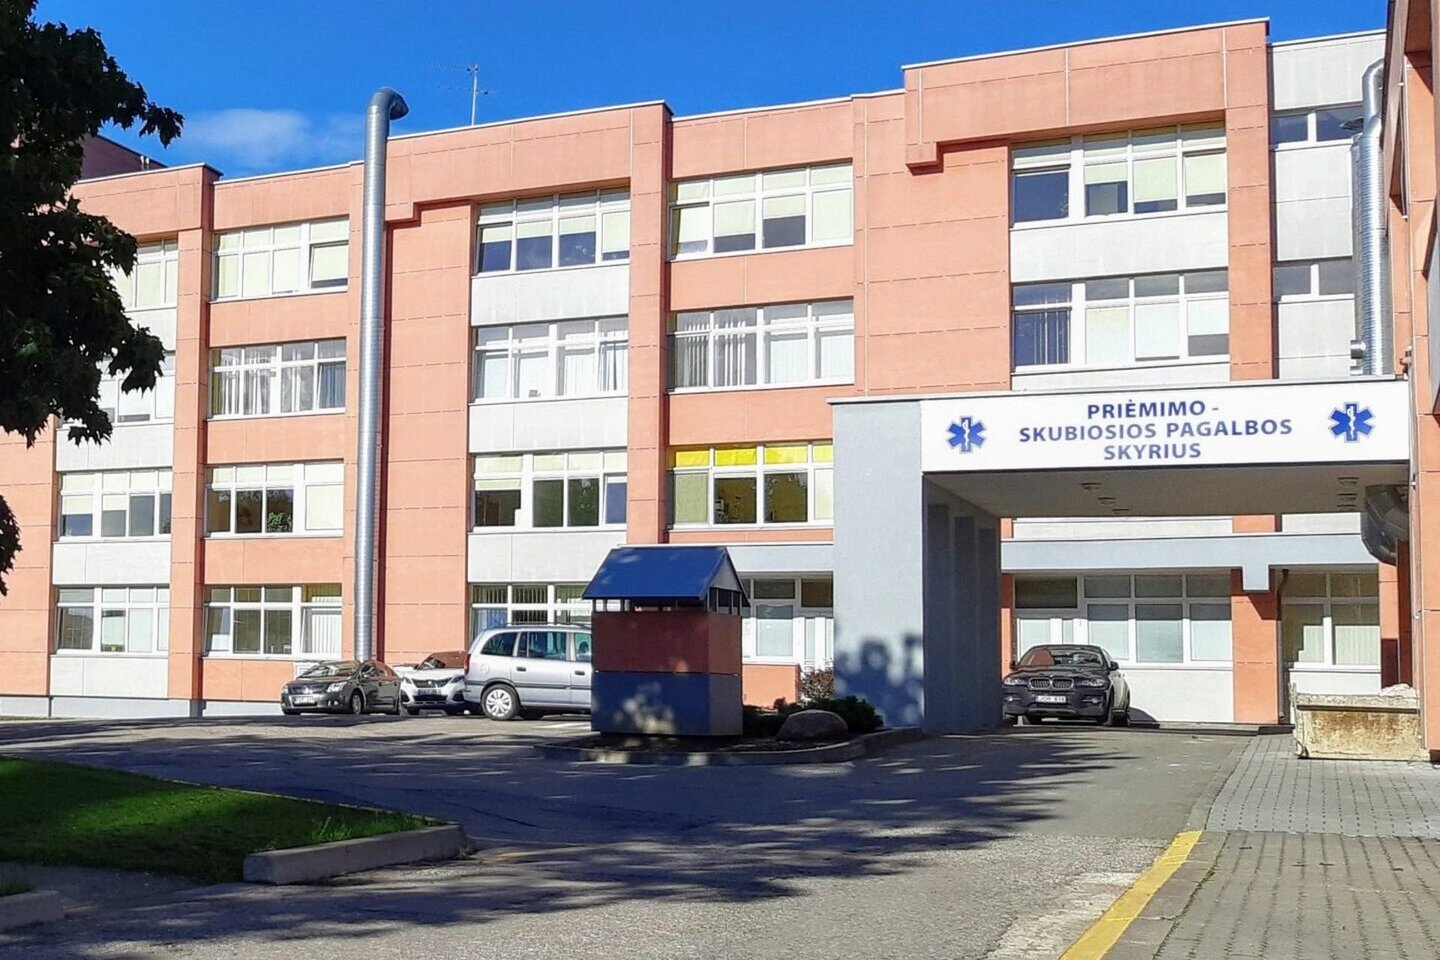  Radviliškio ligoninė tapo koronaviruso židiniu.<br> radviliskioligonine.lt nuotr.